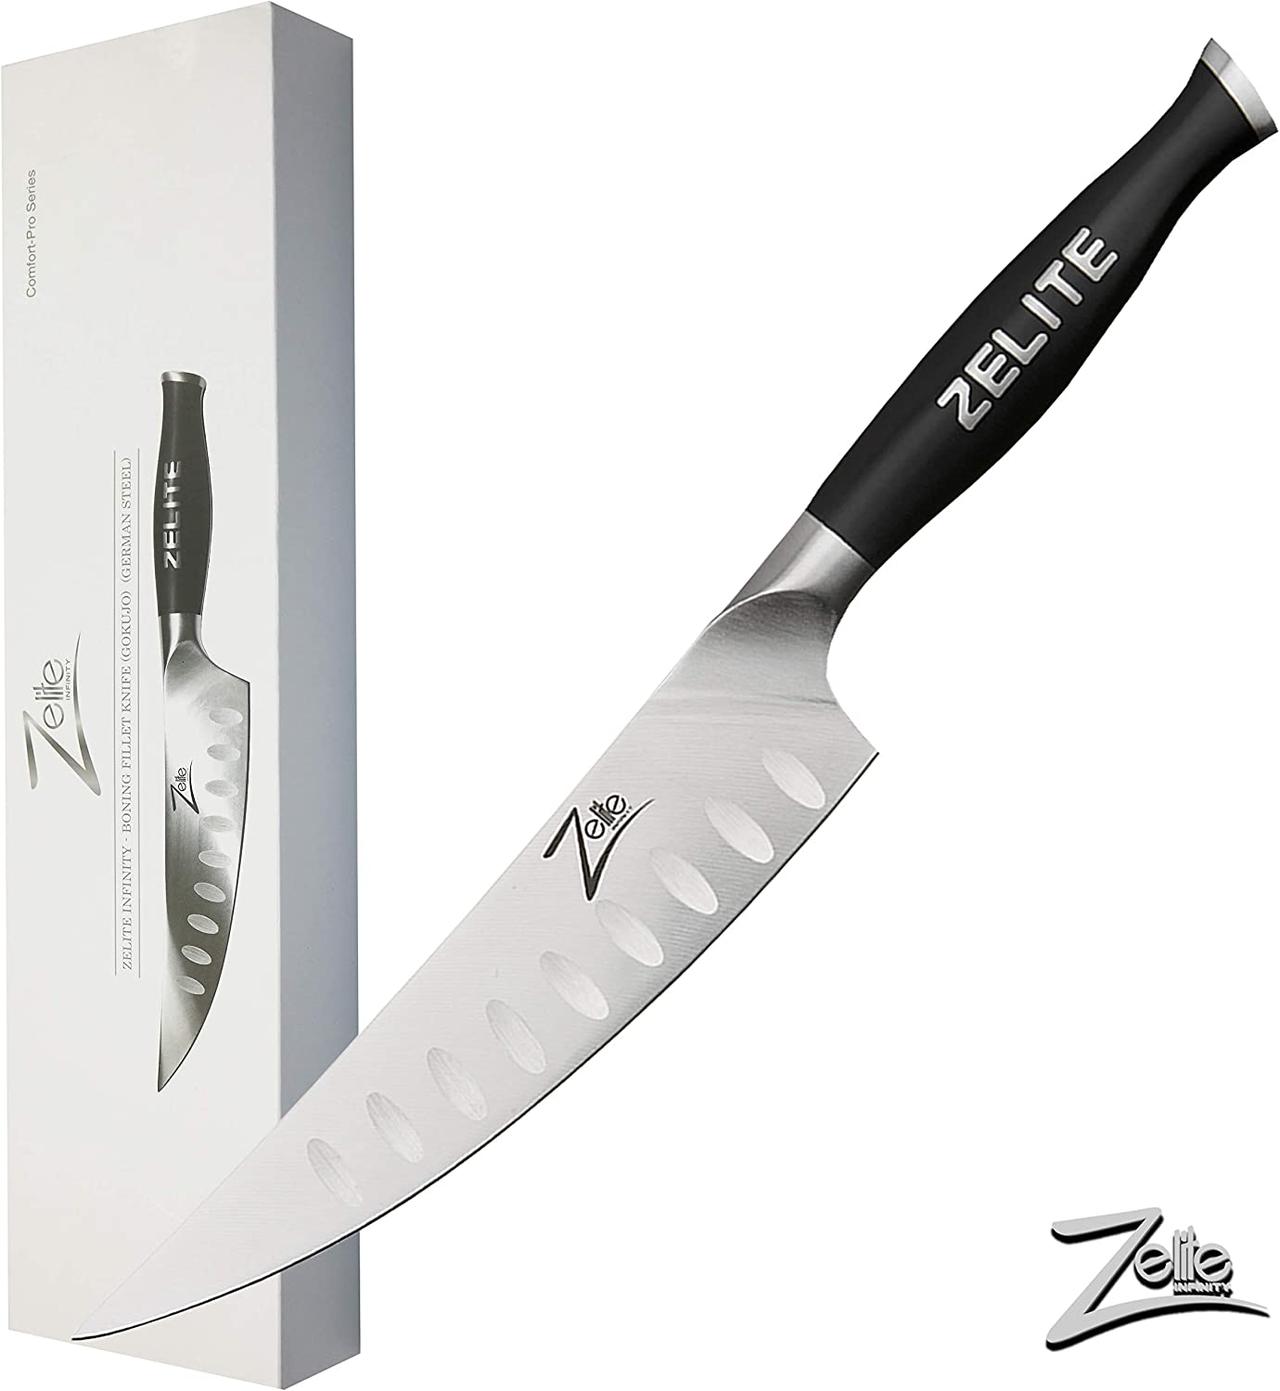 Zelite Infinity 6 Inch Fish Fillet Knife - Best Fillet Knife - Fish Fillet Knife